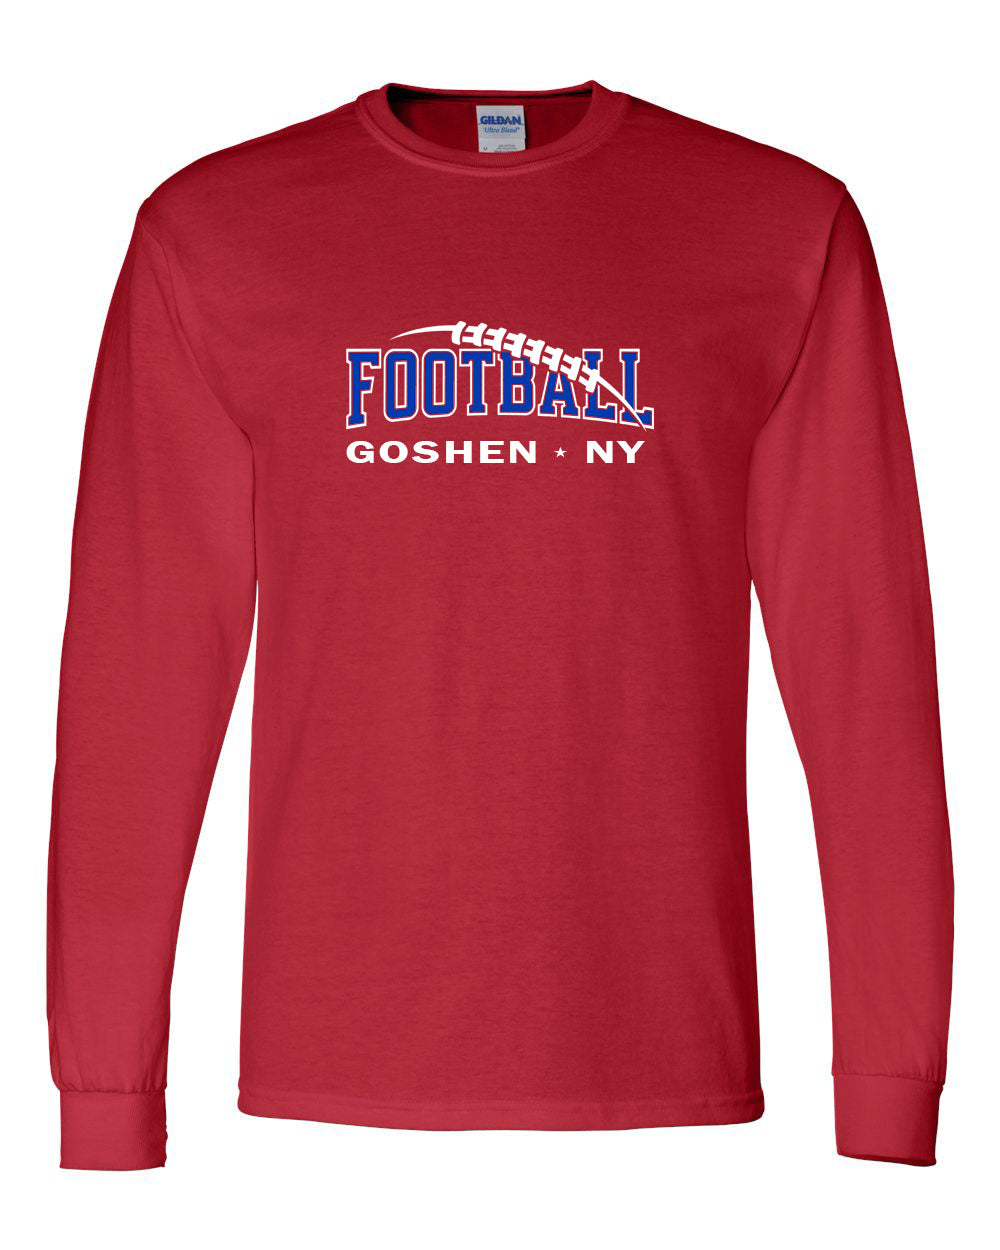 Goshen Football Design 2 Long Sleeve Shirt